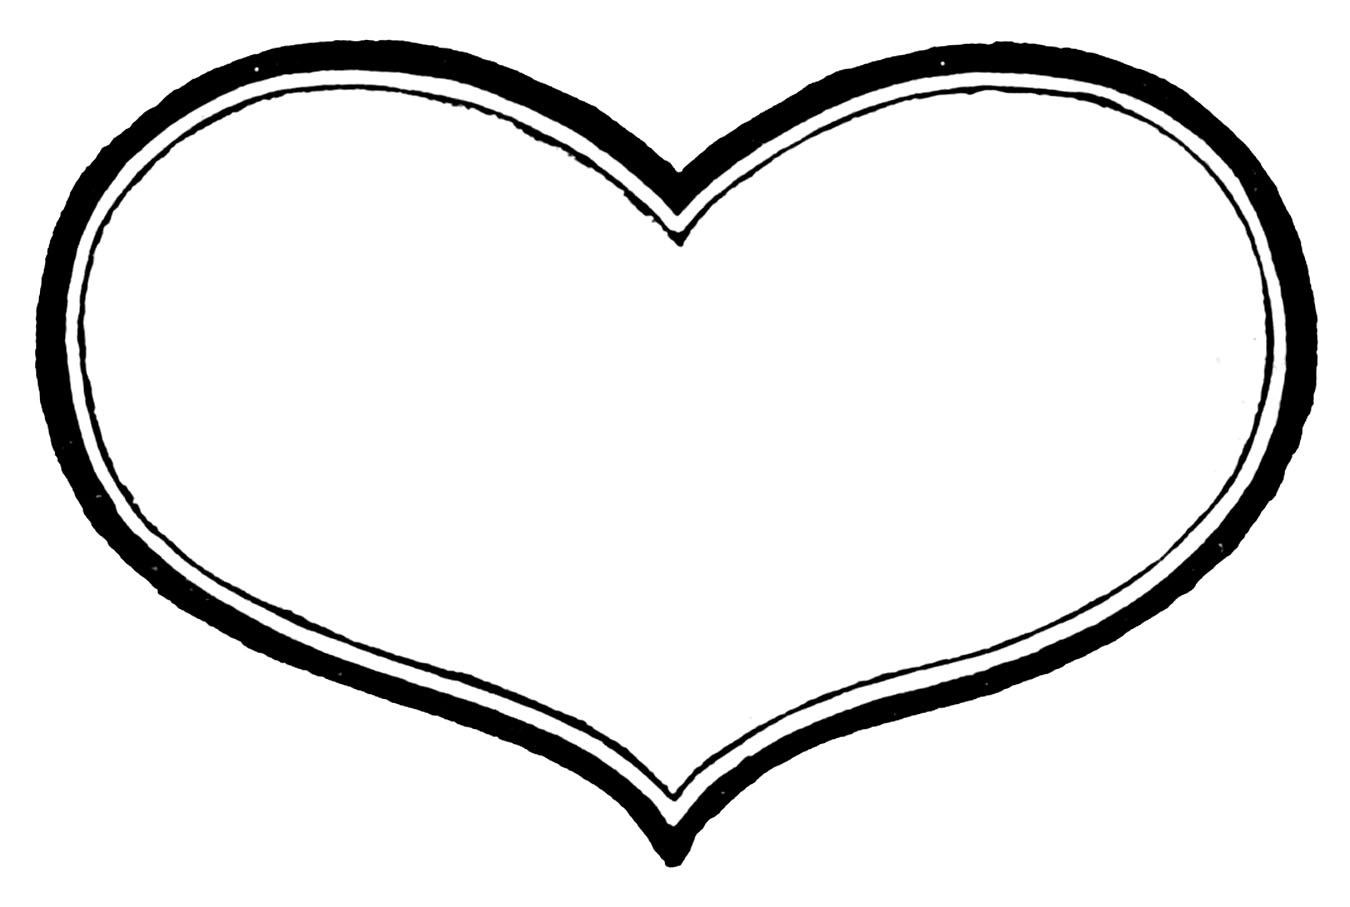 Printable valentine heart